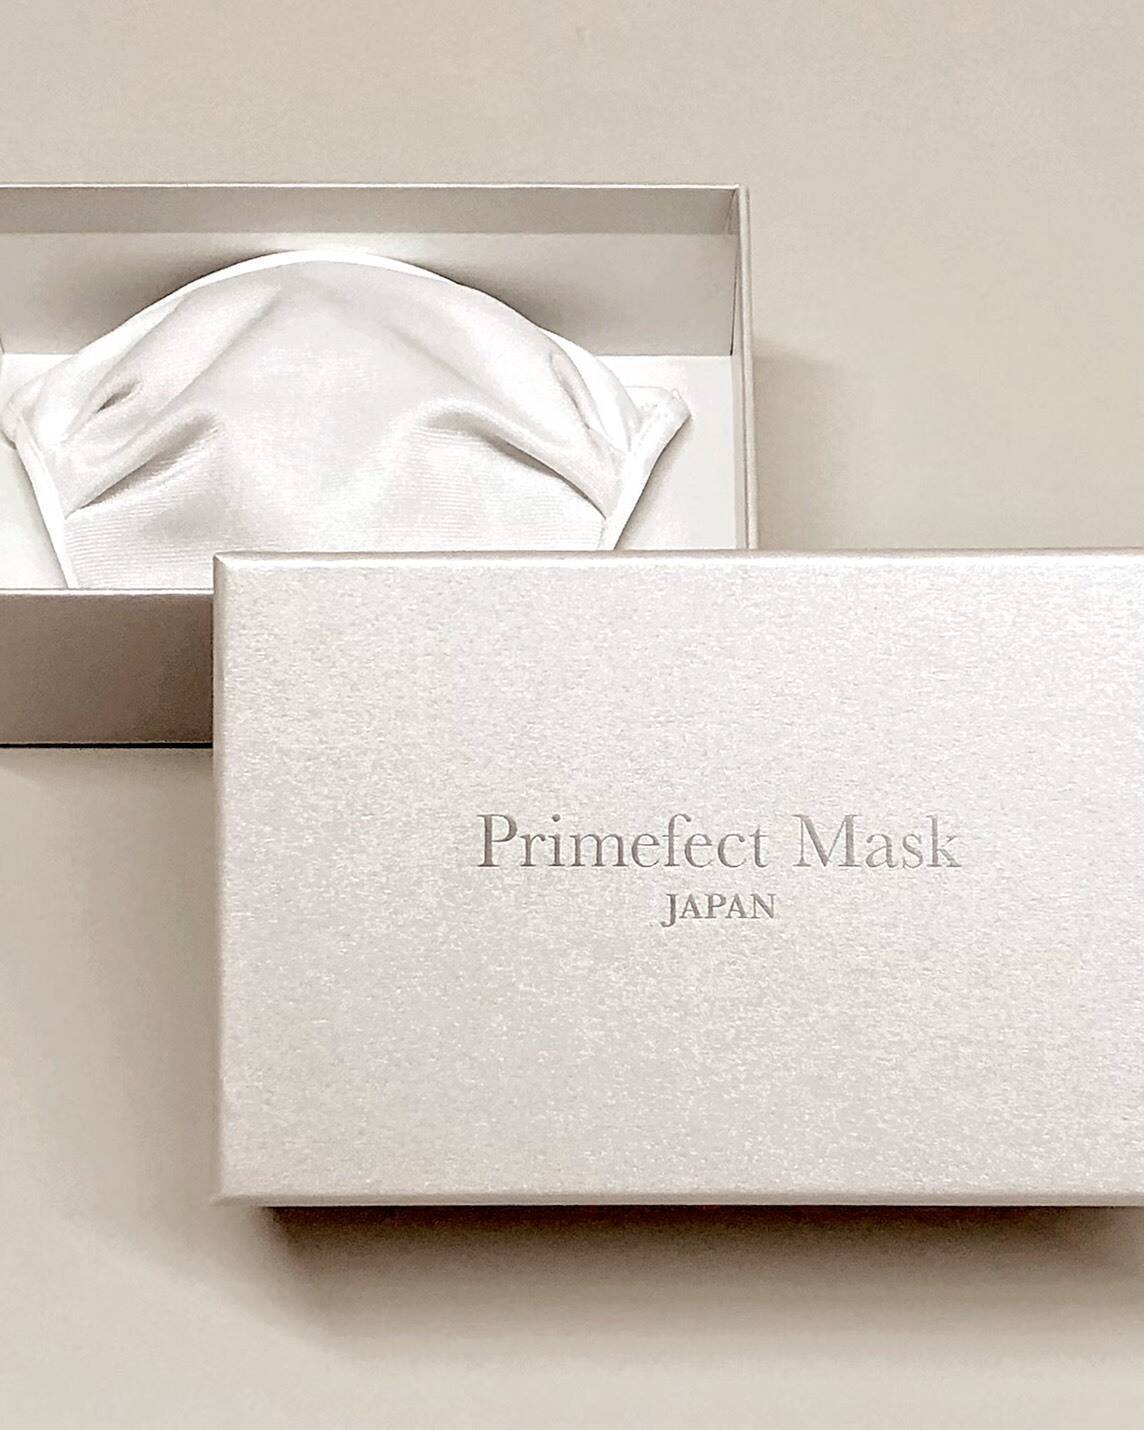 Primefect Mask single item